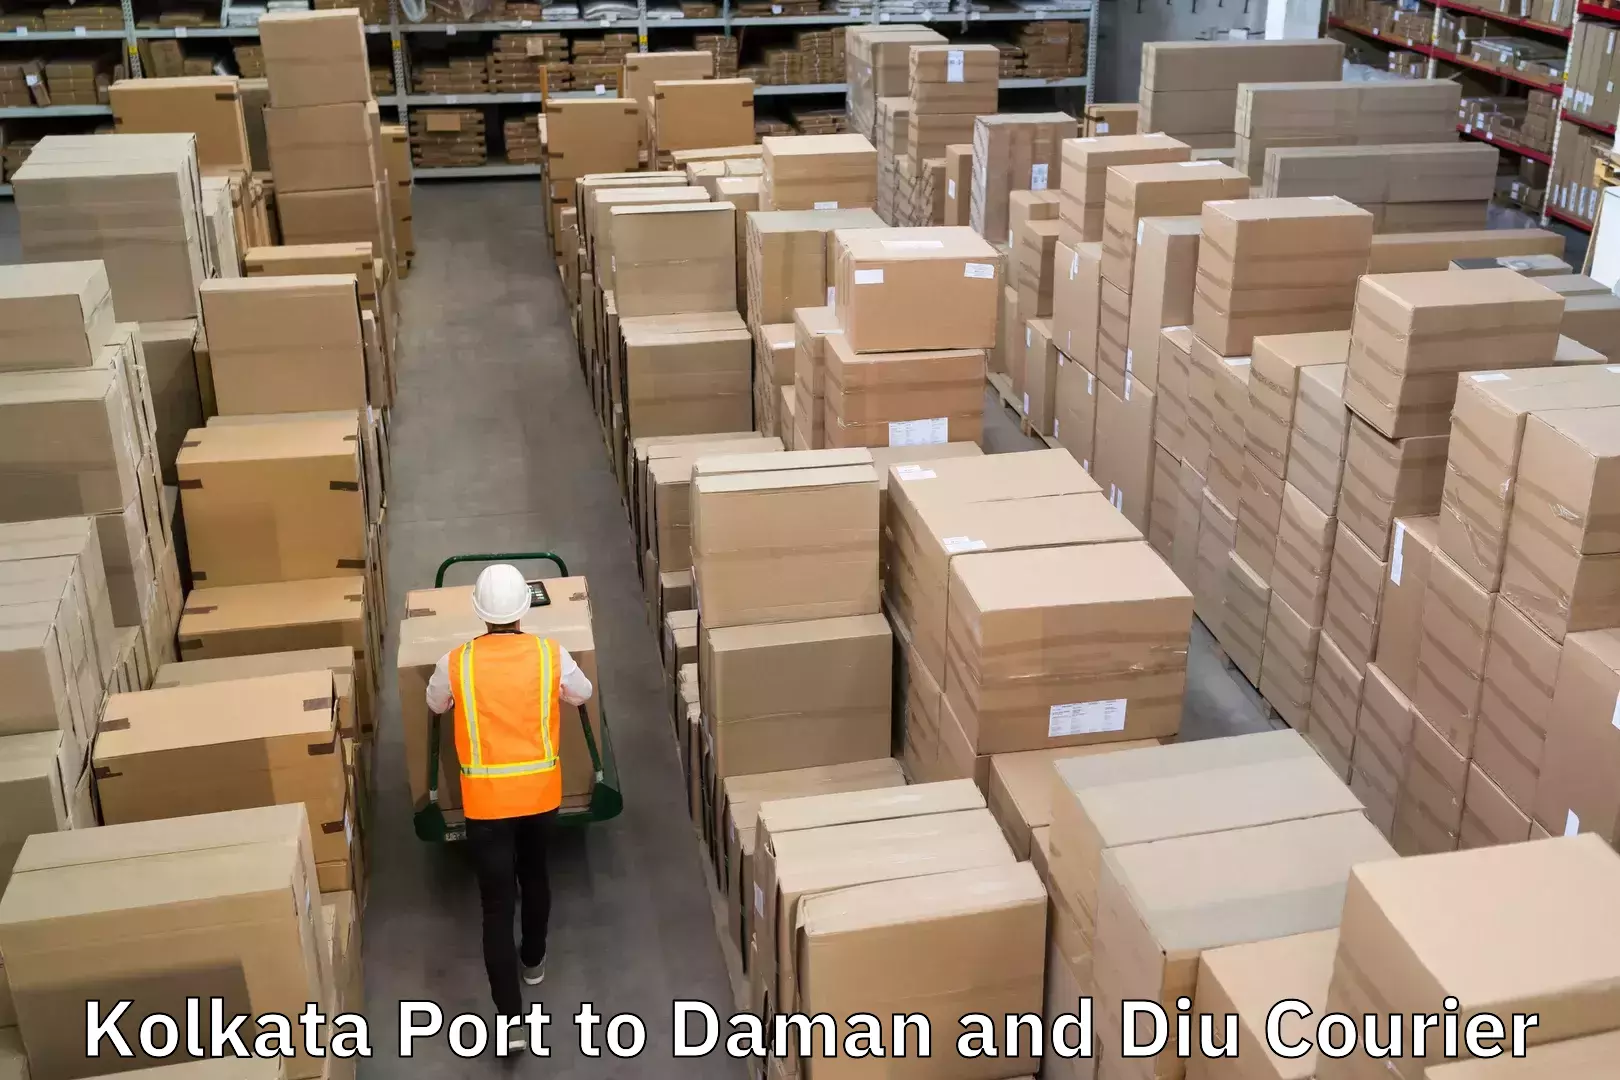 Digital courier platforms Kolkata Port to Daman and Diu